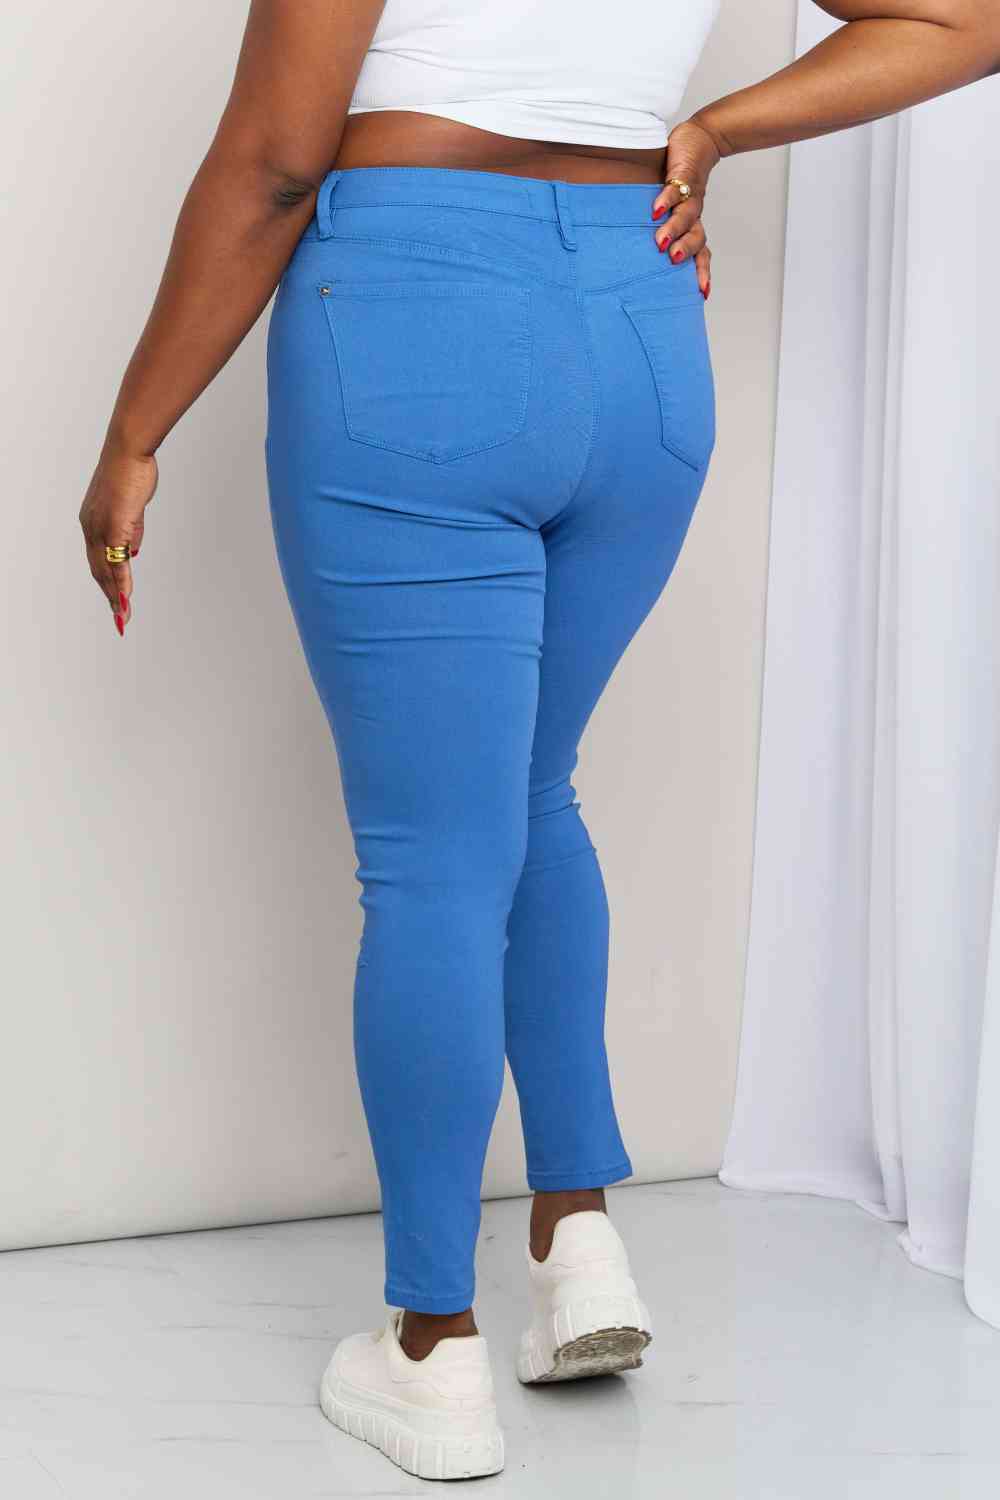 YMI Jeanswear Kate Hyper-Stretch Jean skinny taille moyenne pleine taille en bleu électrique